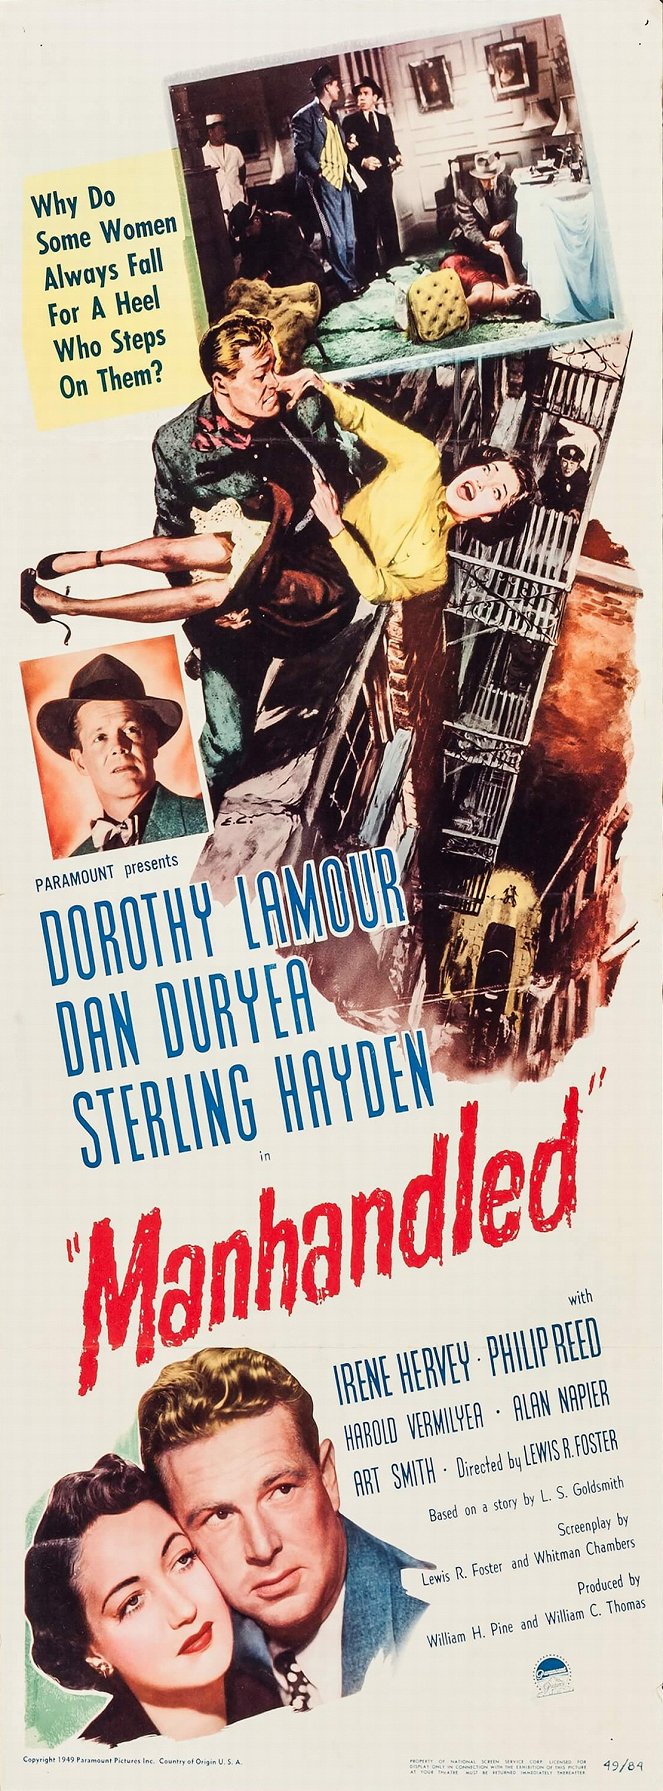 Manhandled - Posters